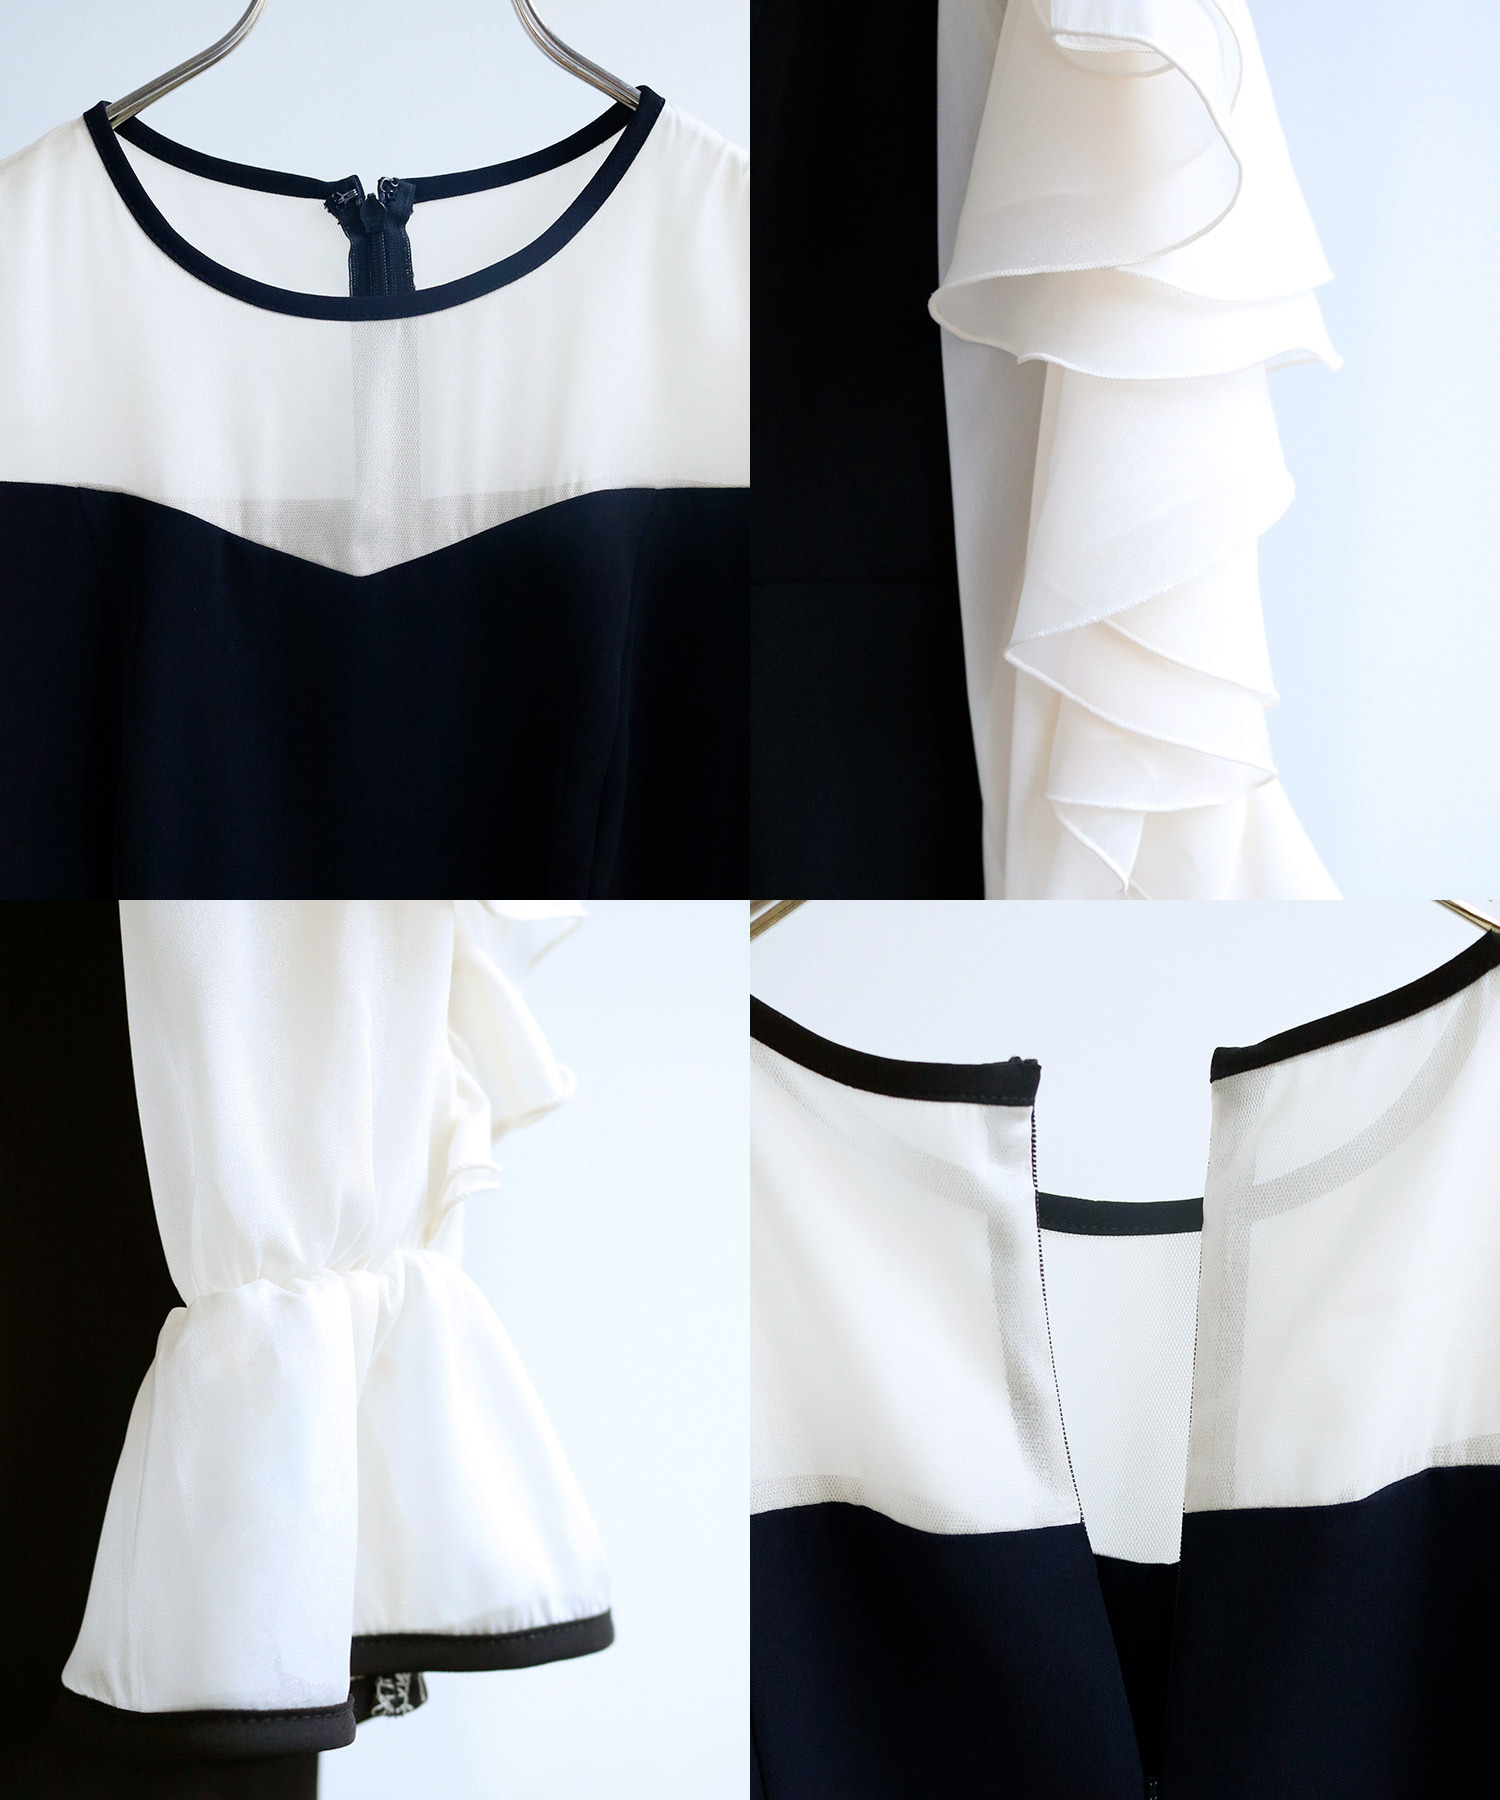 REPLETE/WEB限定】ruffle sleeves DRESS(723923) | WHITE JOOLA ONLINE